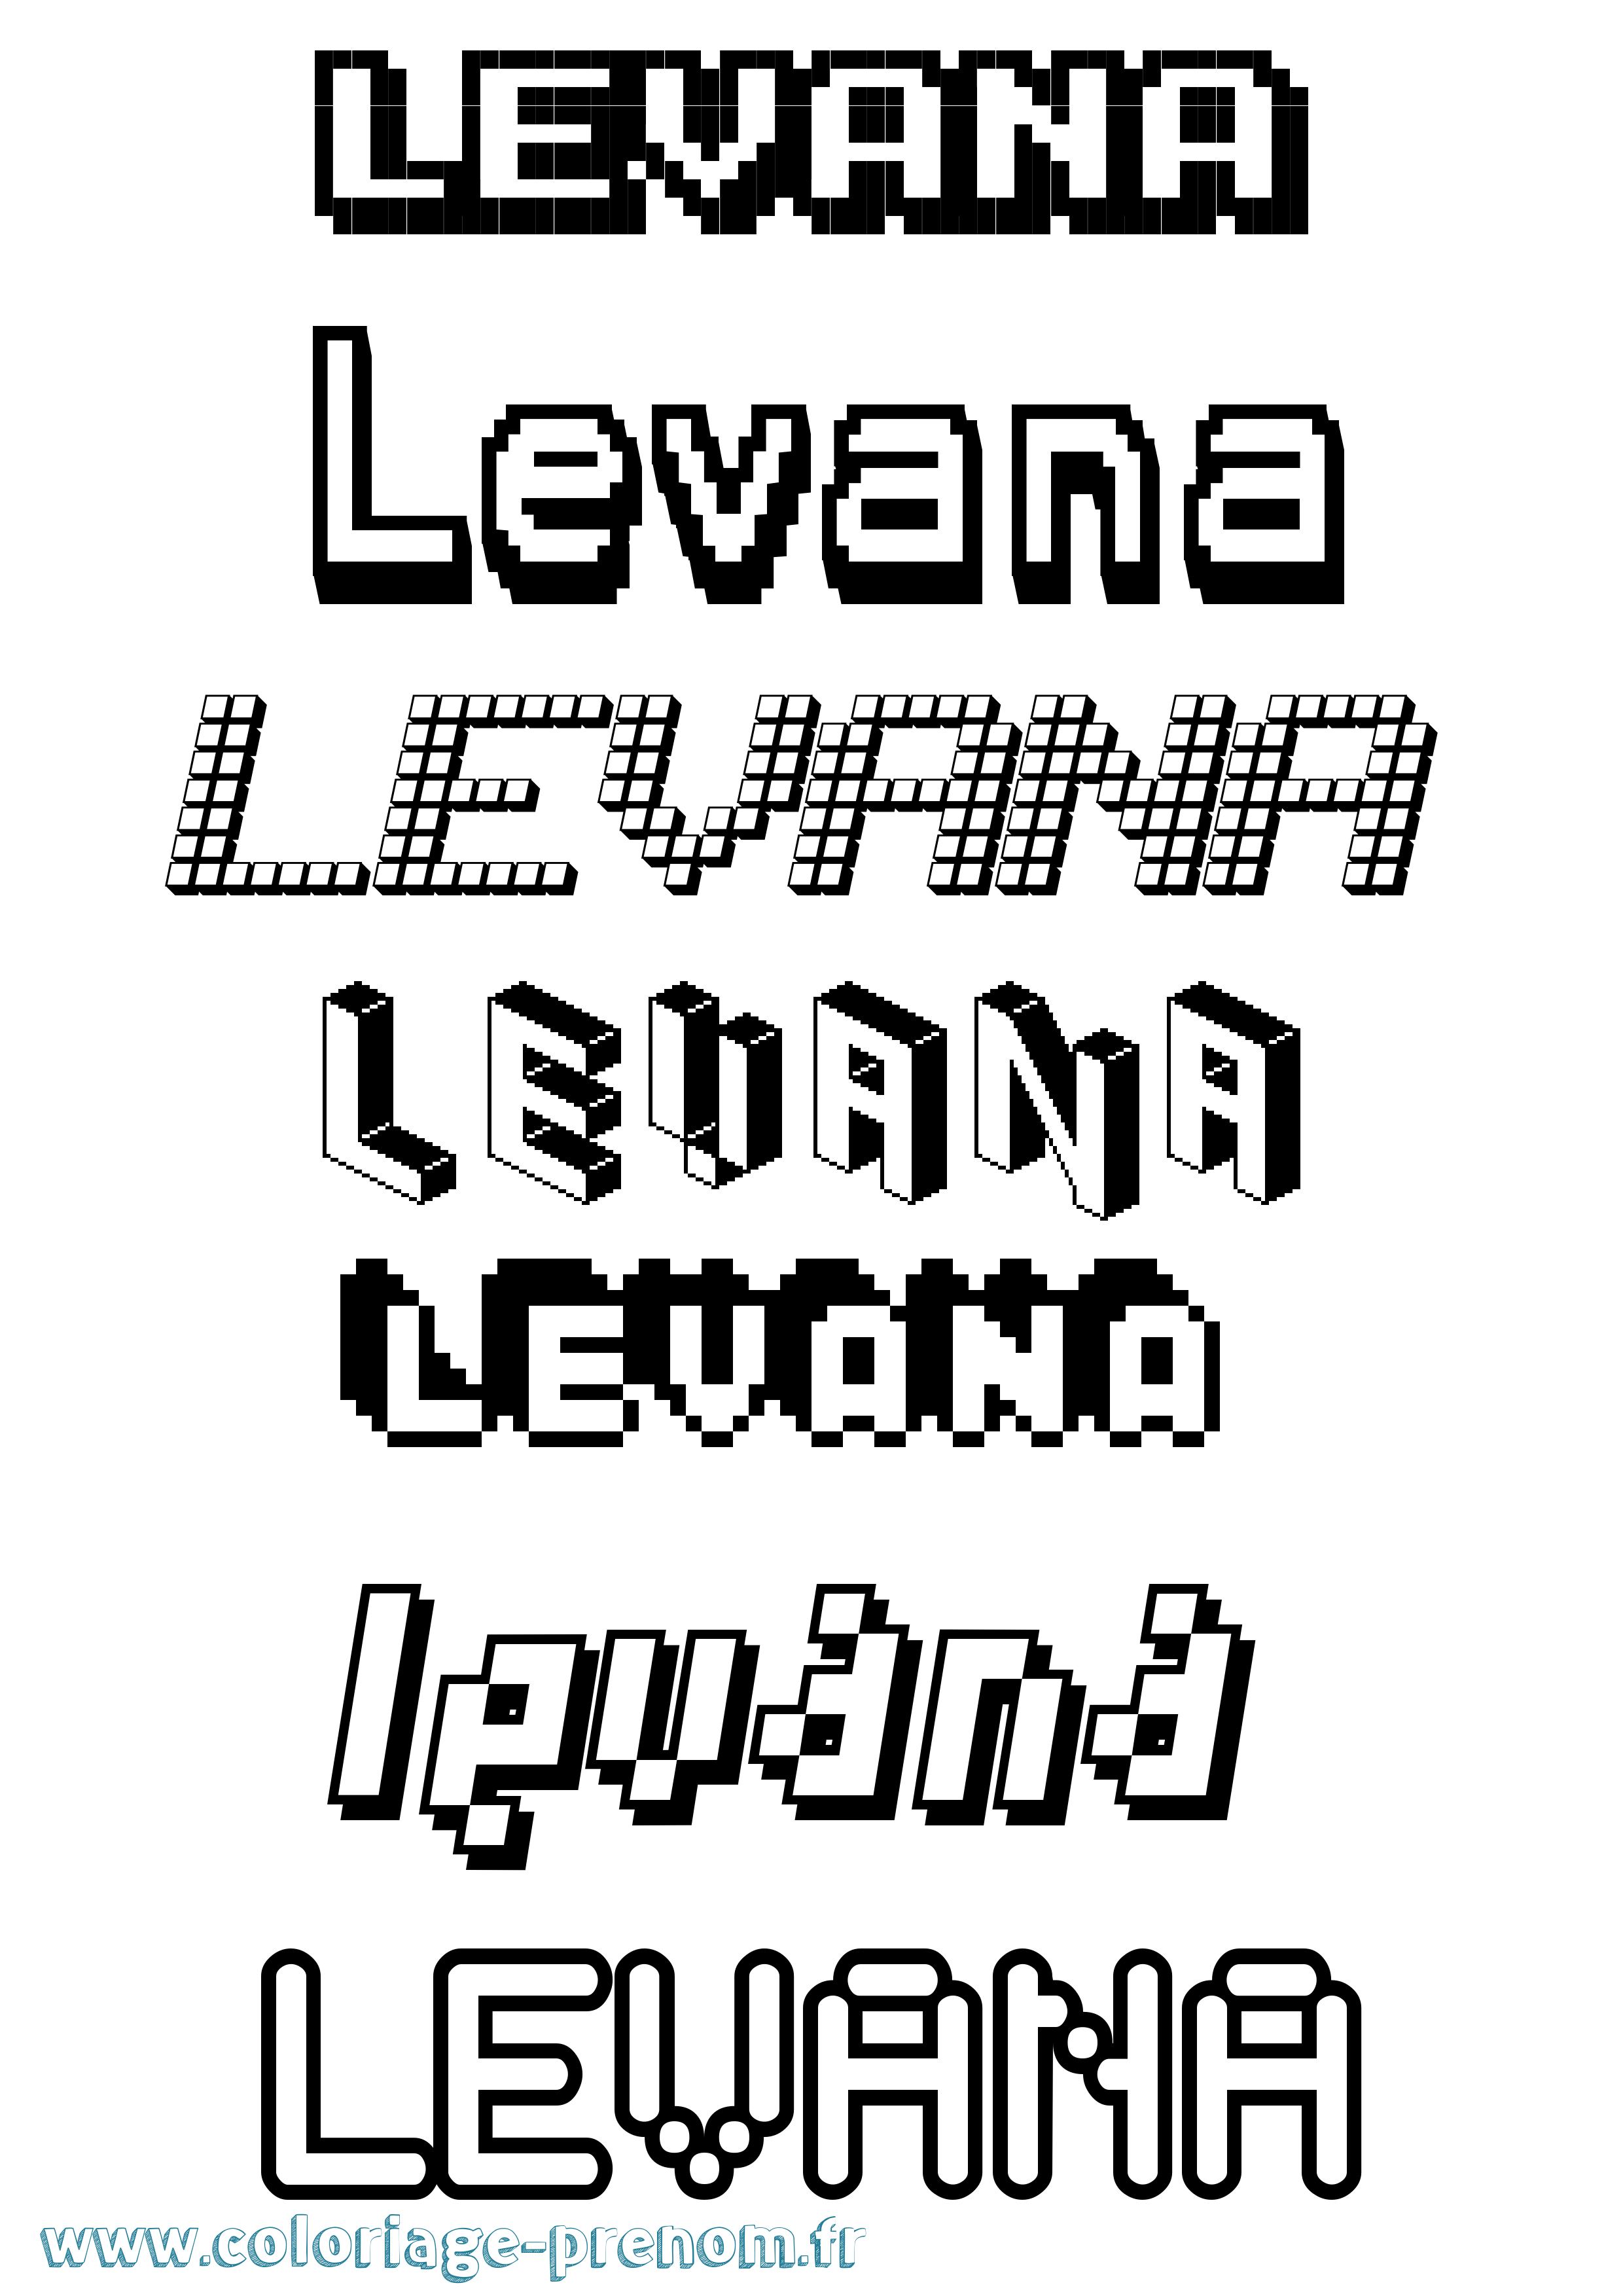 Coloriage prénom Levana Pixel